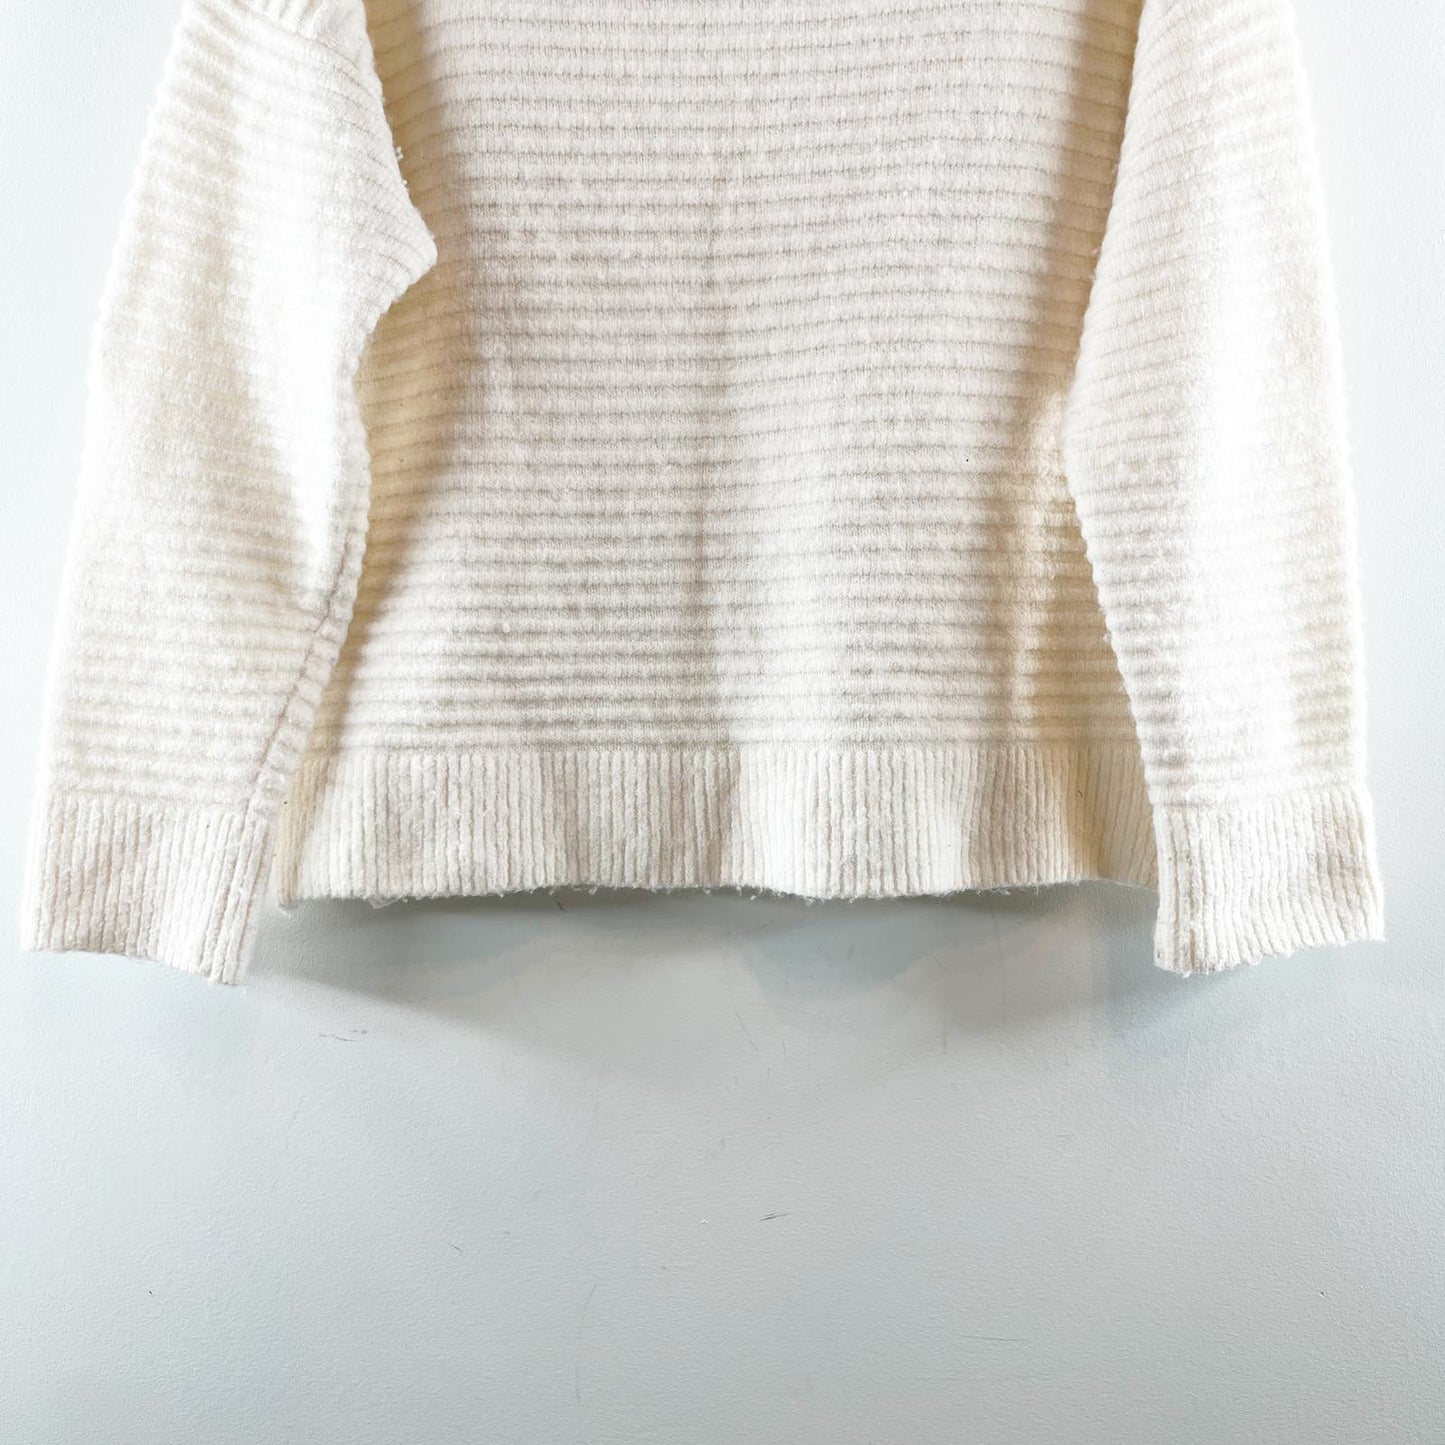 Madewell Belmont Mockneck Ivory Antique Cream Sweater in Coziest Yarn Medium